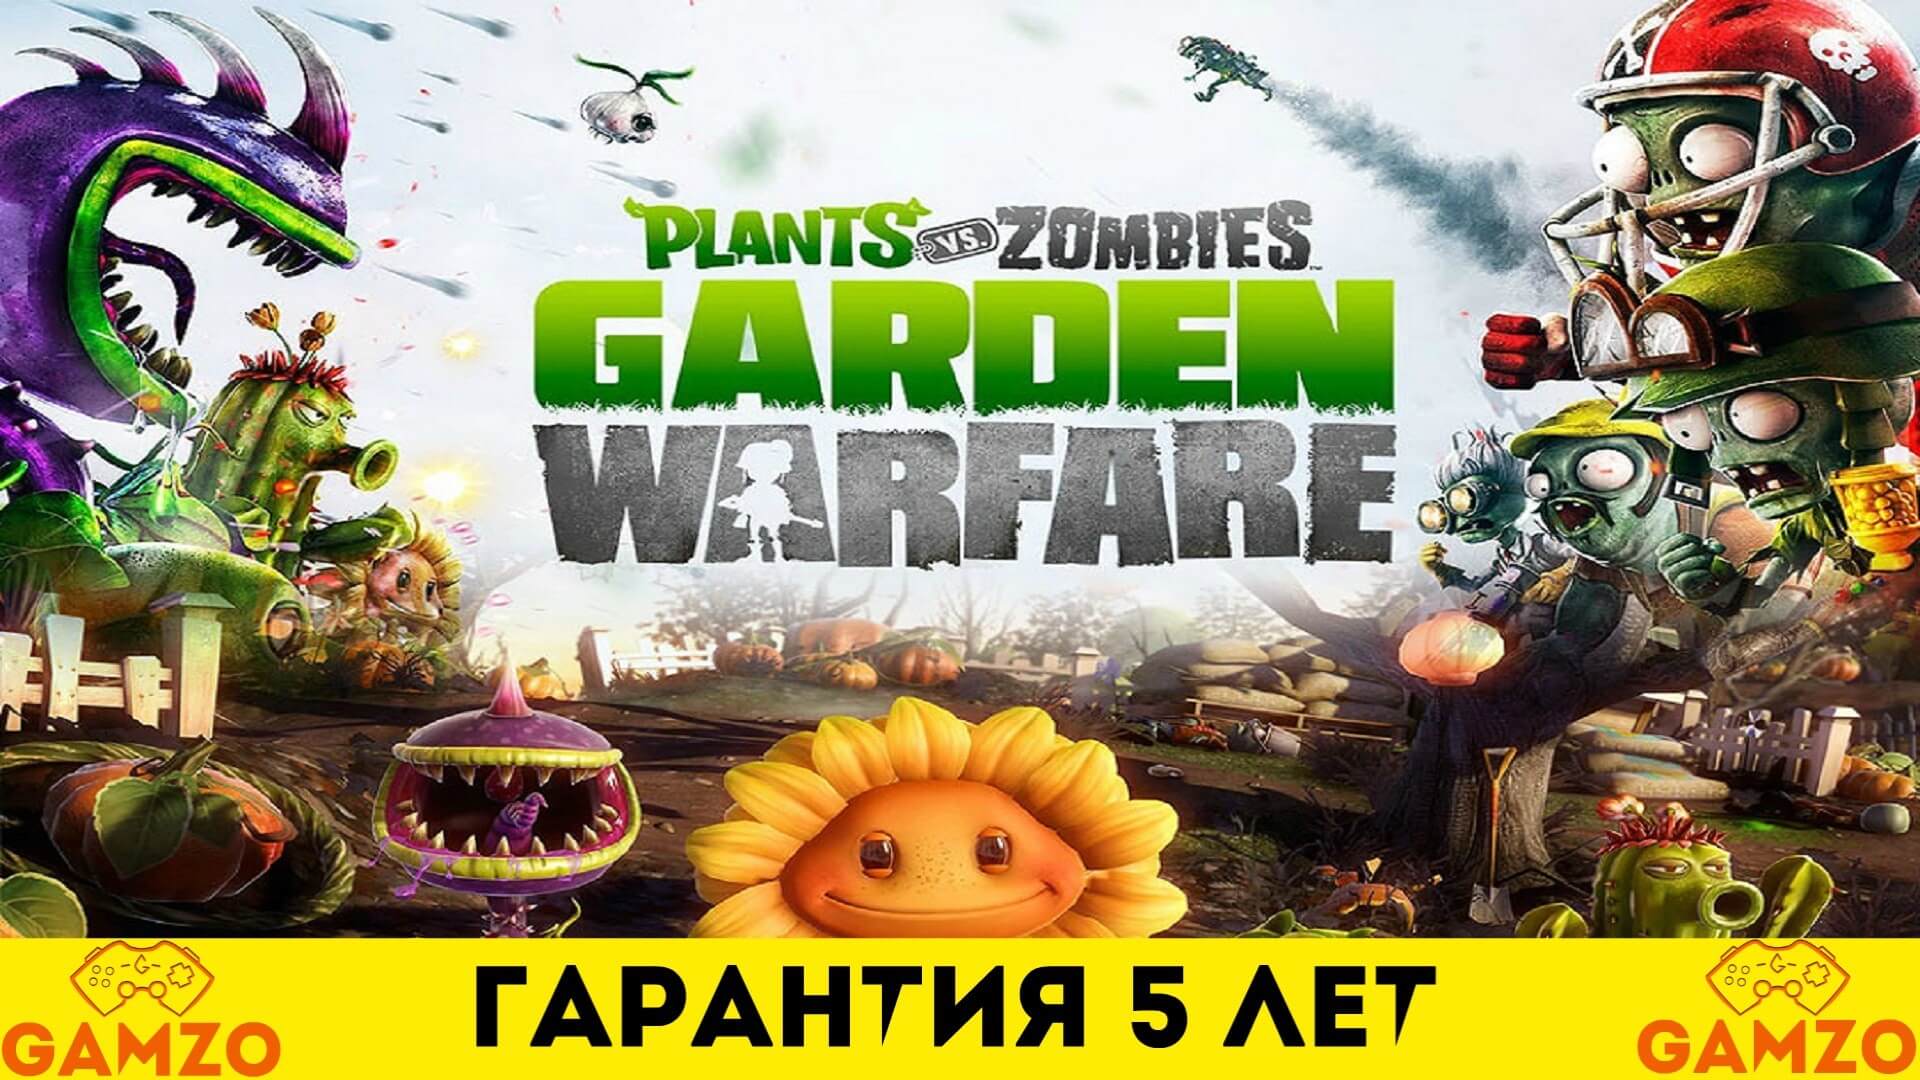 Steam plants vs zombies garden фото 52